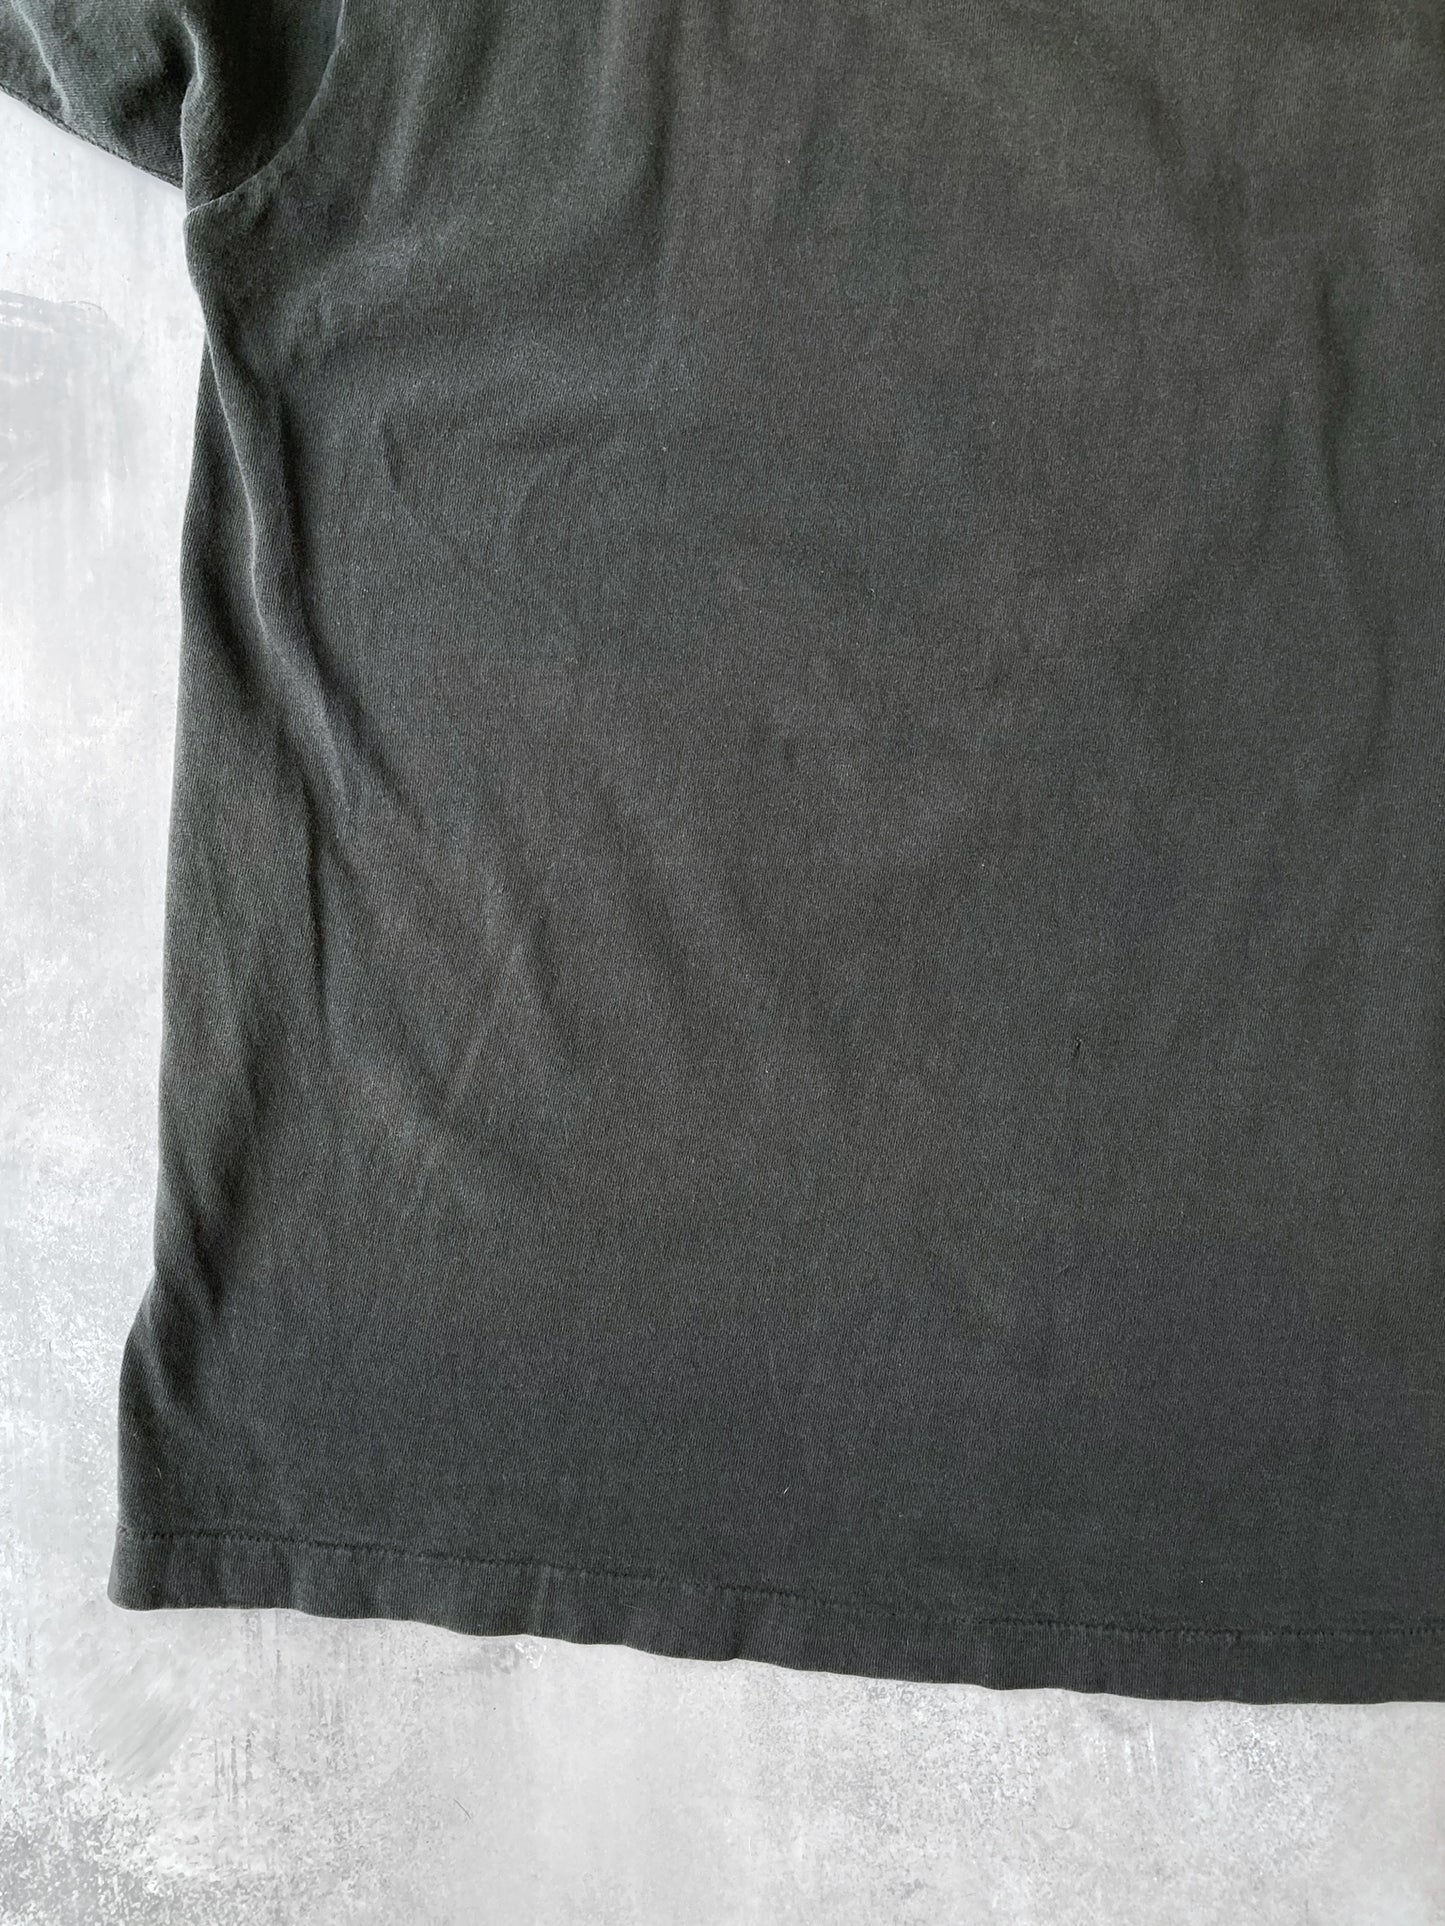 Batman Bat Signal T-Shirt '88 - XL